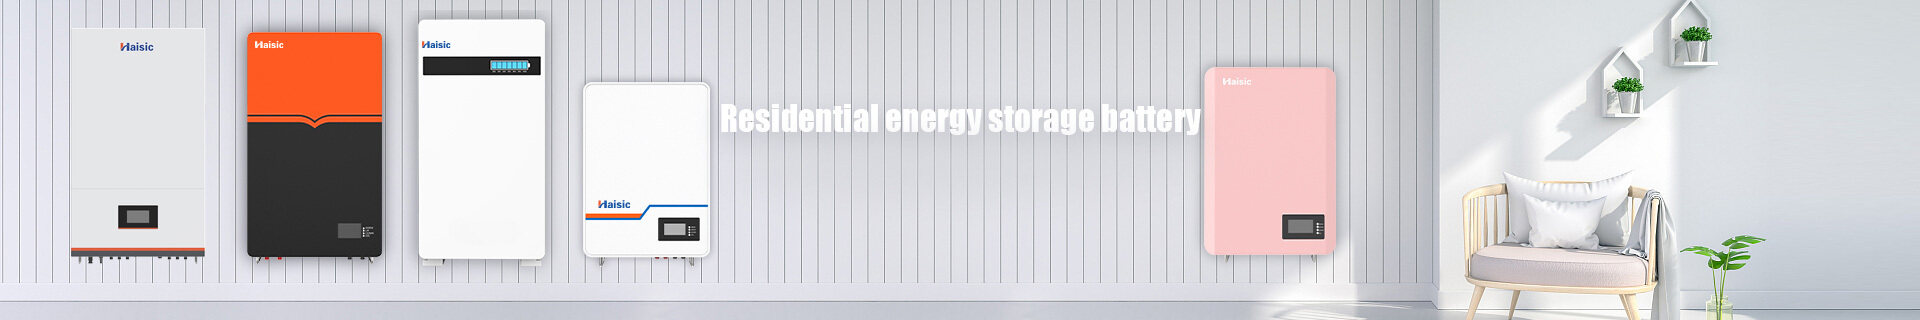 energy storage systems for solar power, energy storage system solar